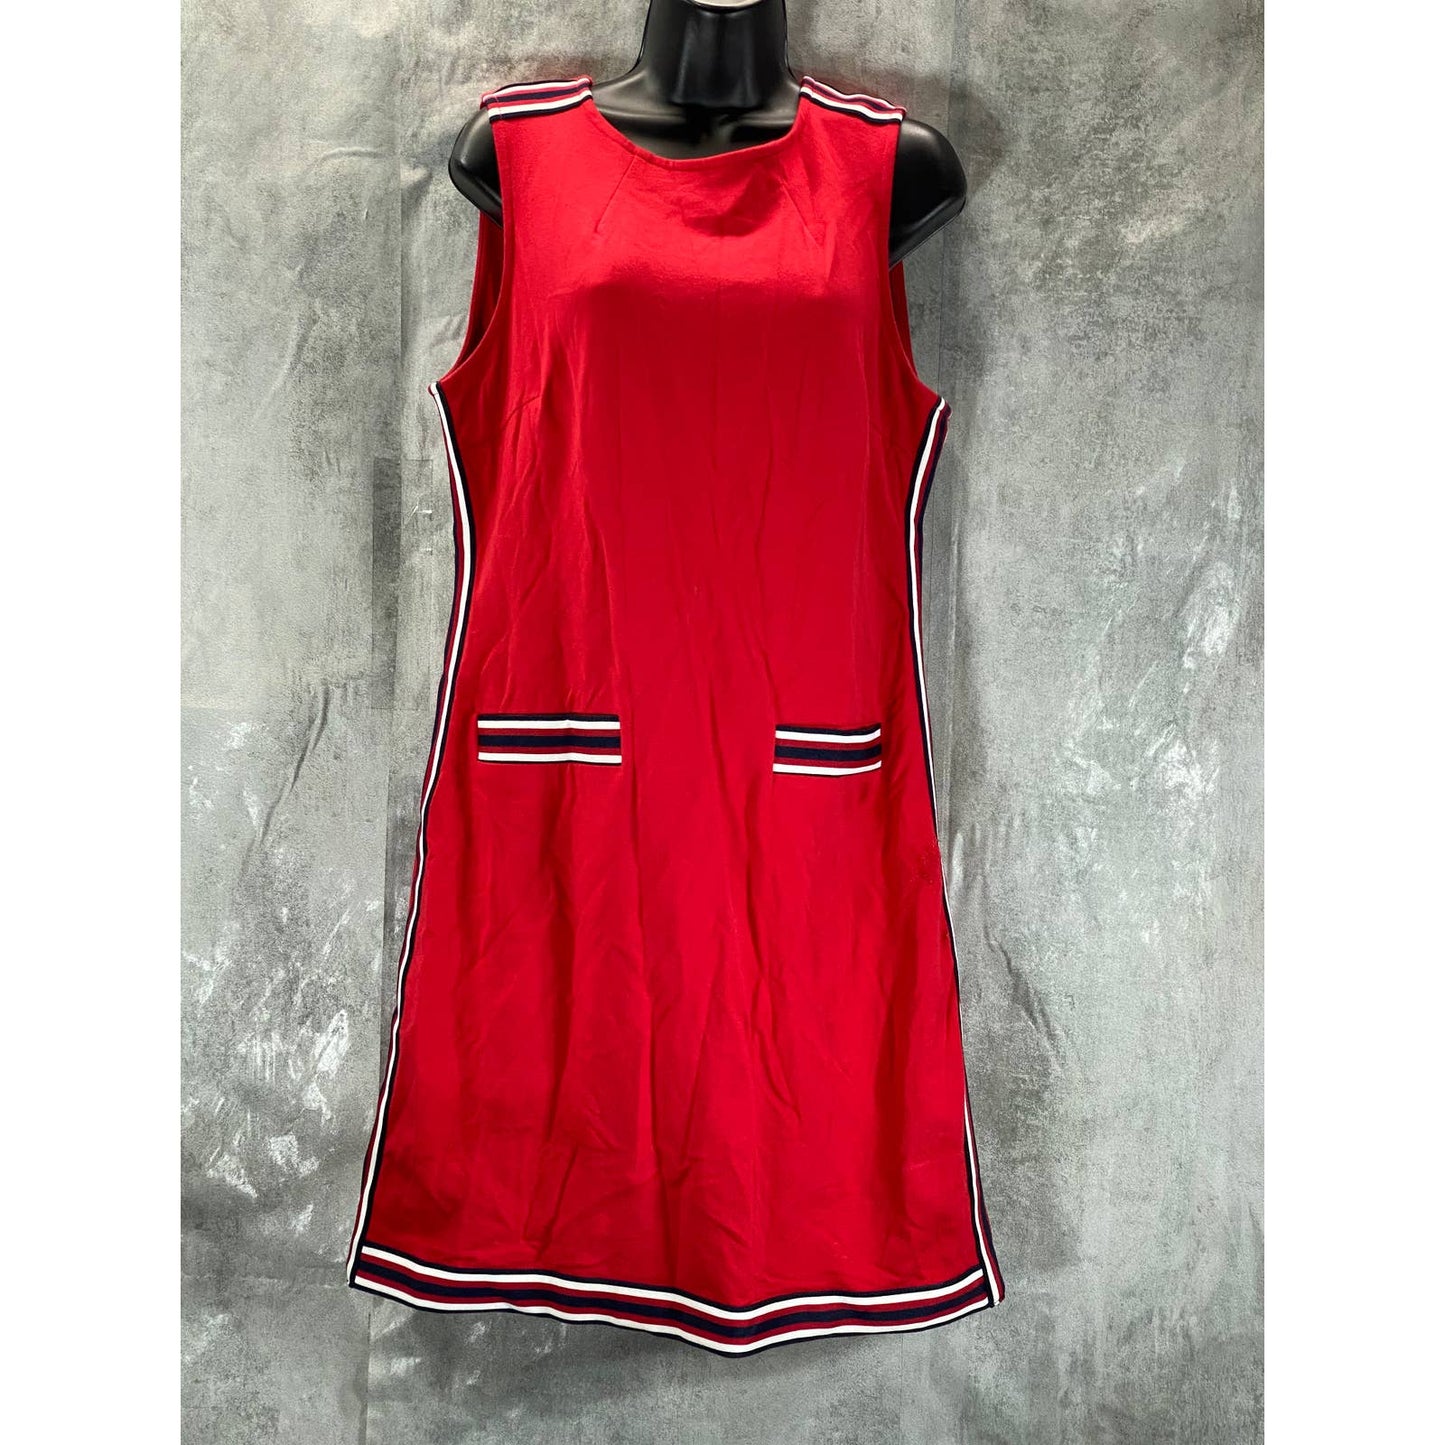 TOMMY HILFIGER Women's Scarlet Striped-Trim Sleeveless Shift Mini Dress SZ M